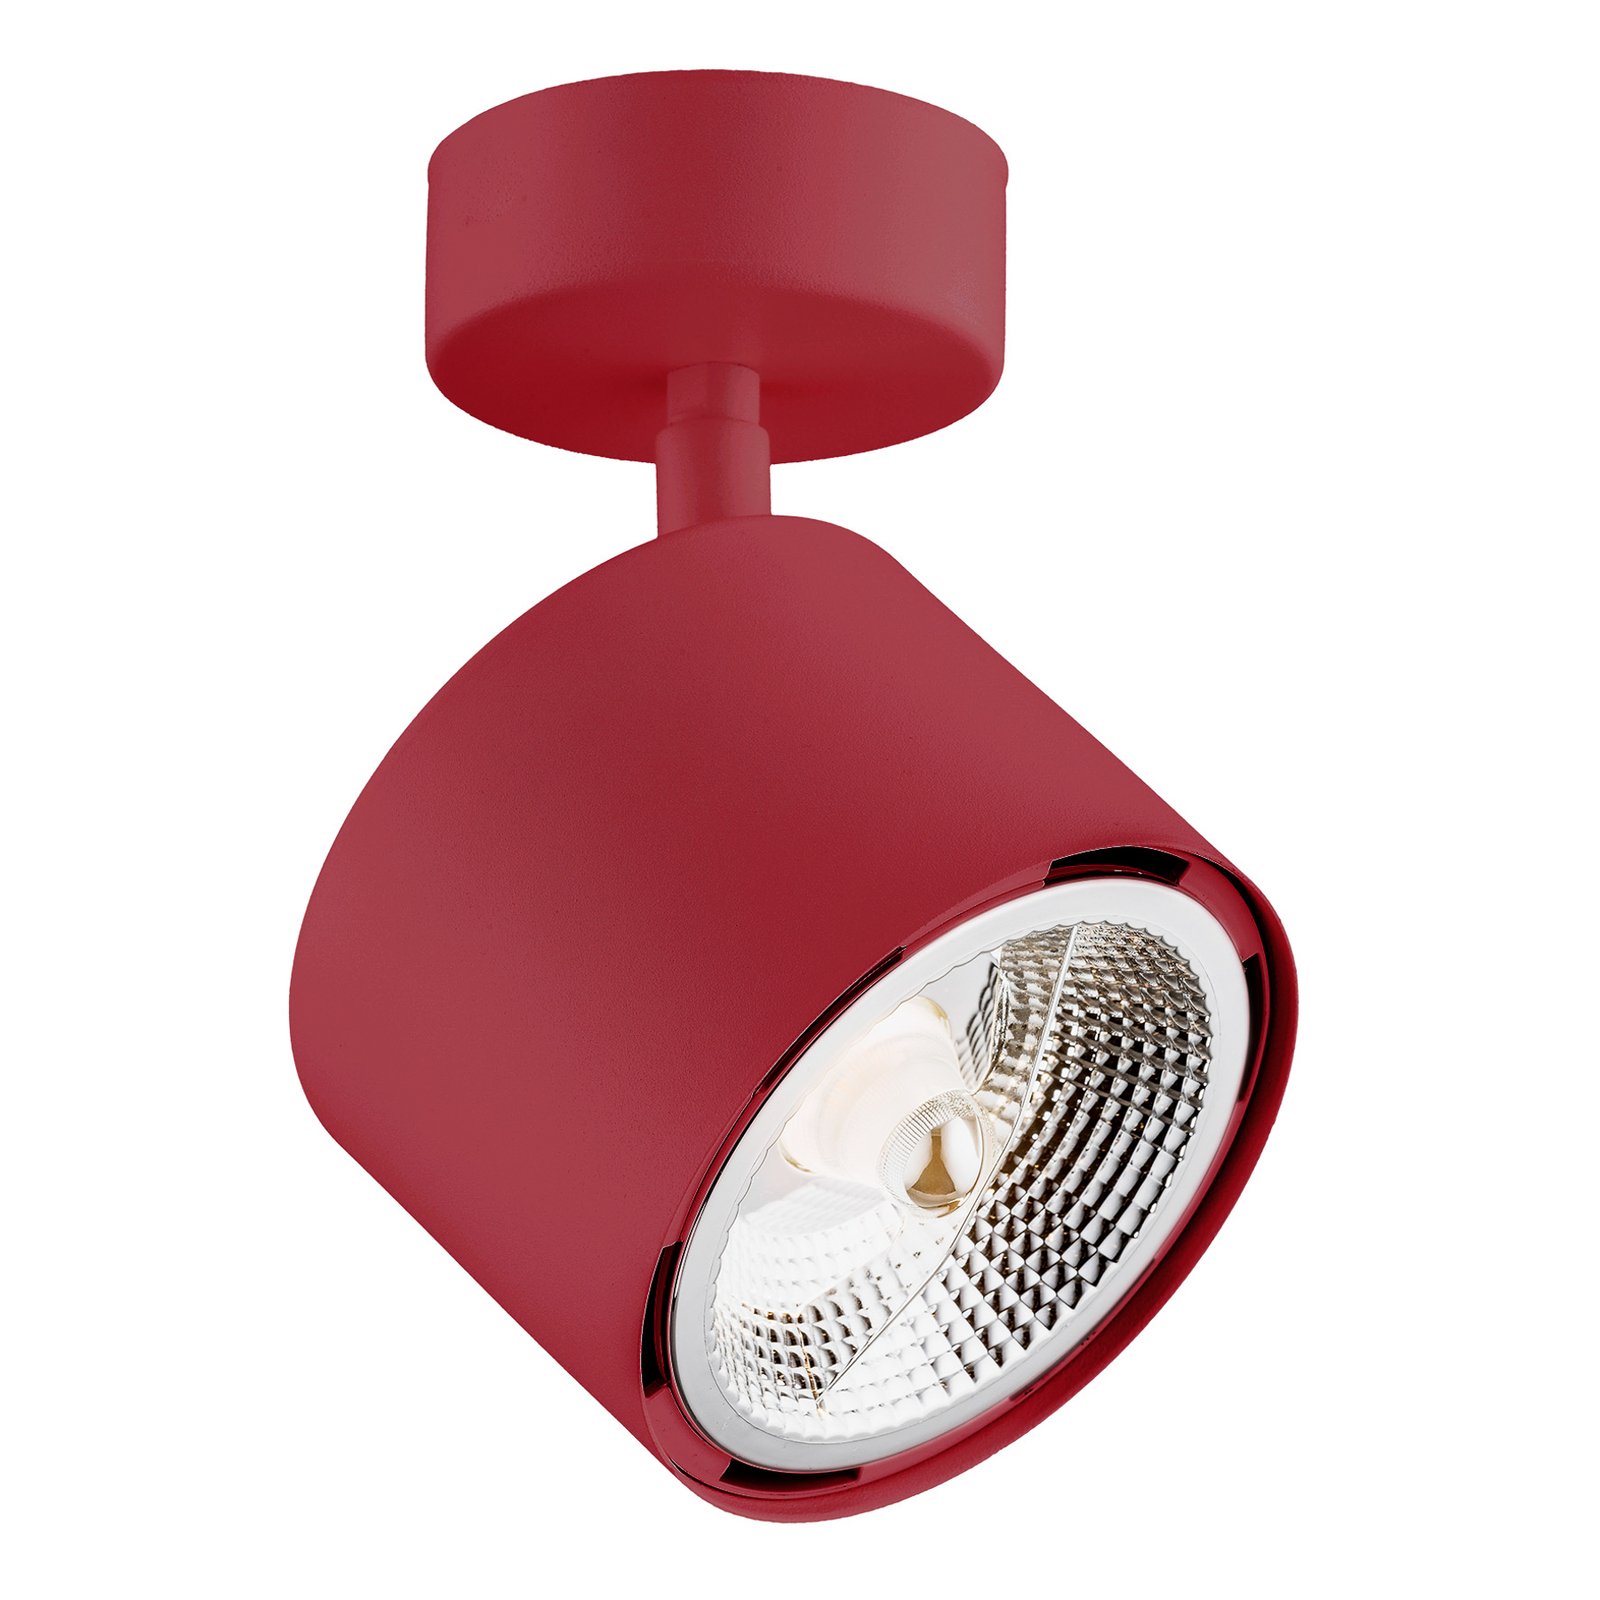 Chloe downlight adjustable 1-bulb, red